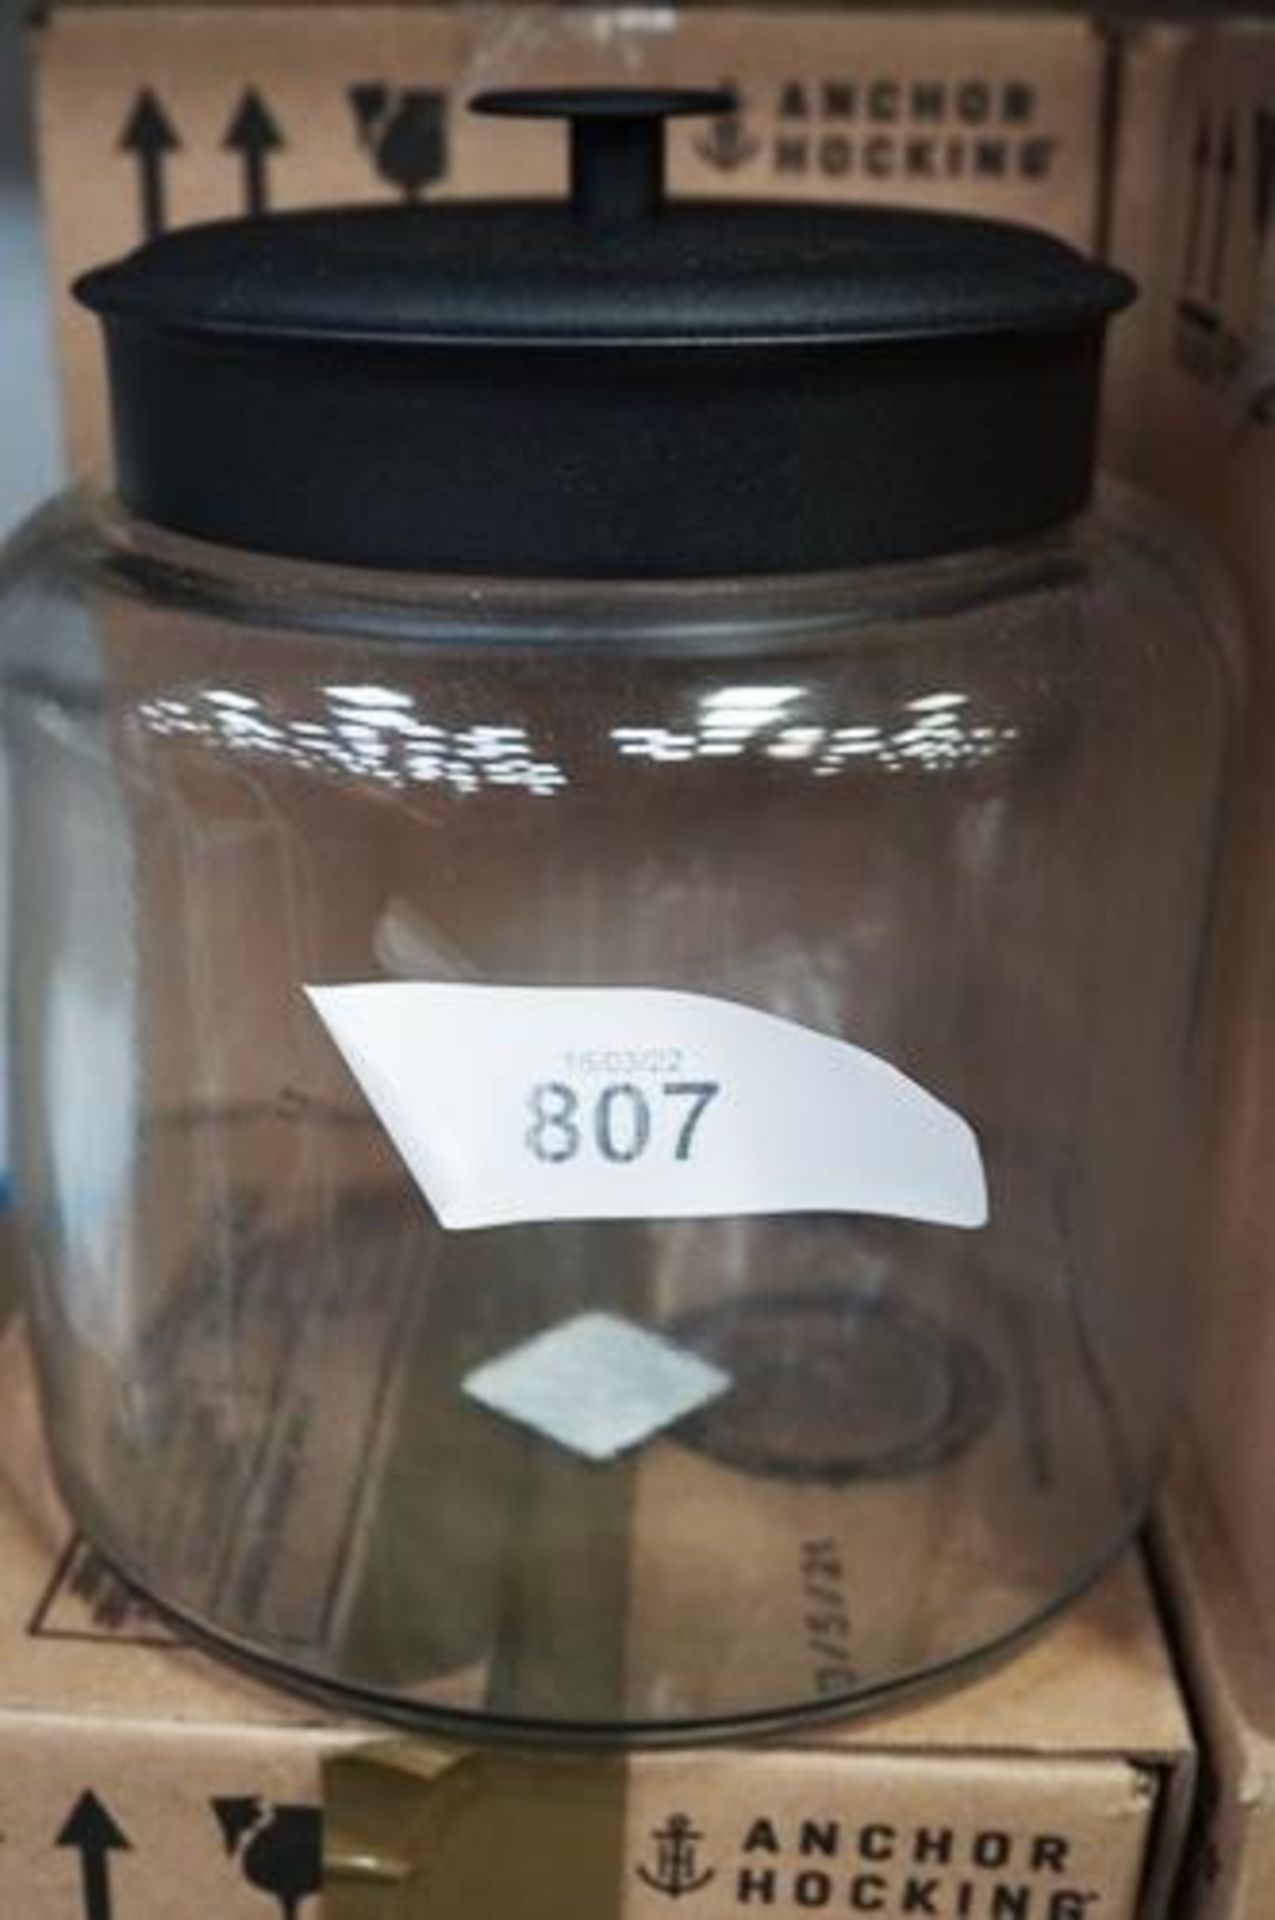 29 x Anchor Hocking 1.5 Gallon Montana Glass Jar with black metal lid. -new- (GS29B).